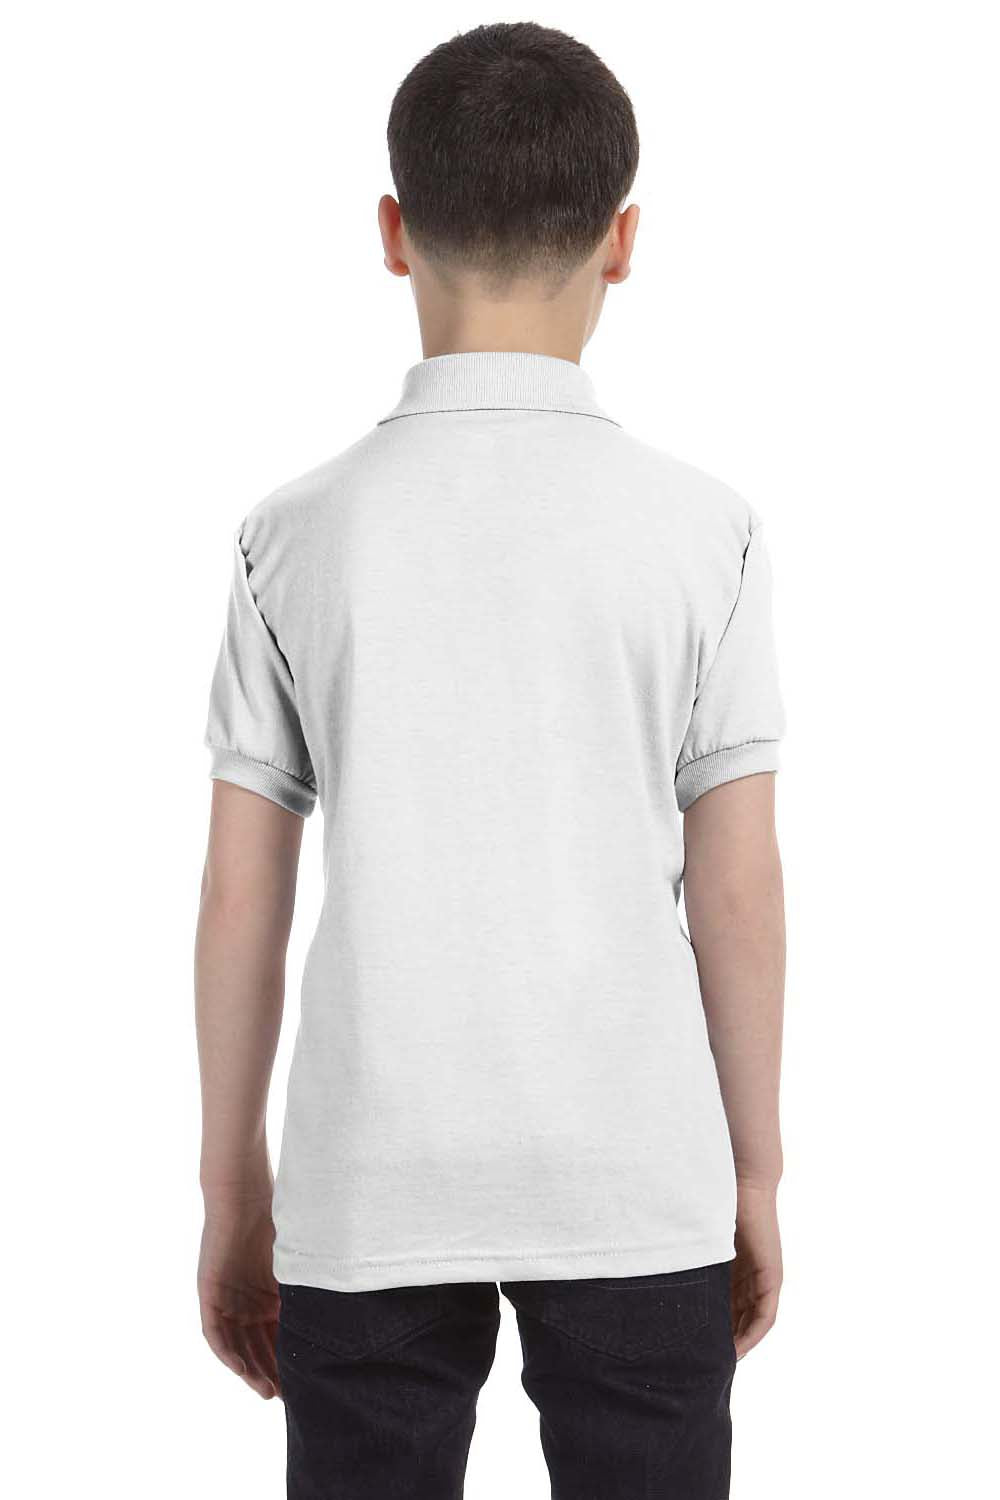 Hanes 054Y Youth EcoSmart Short Sleeve Polo Shirt White Back